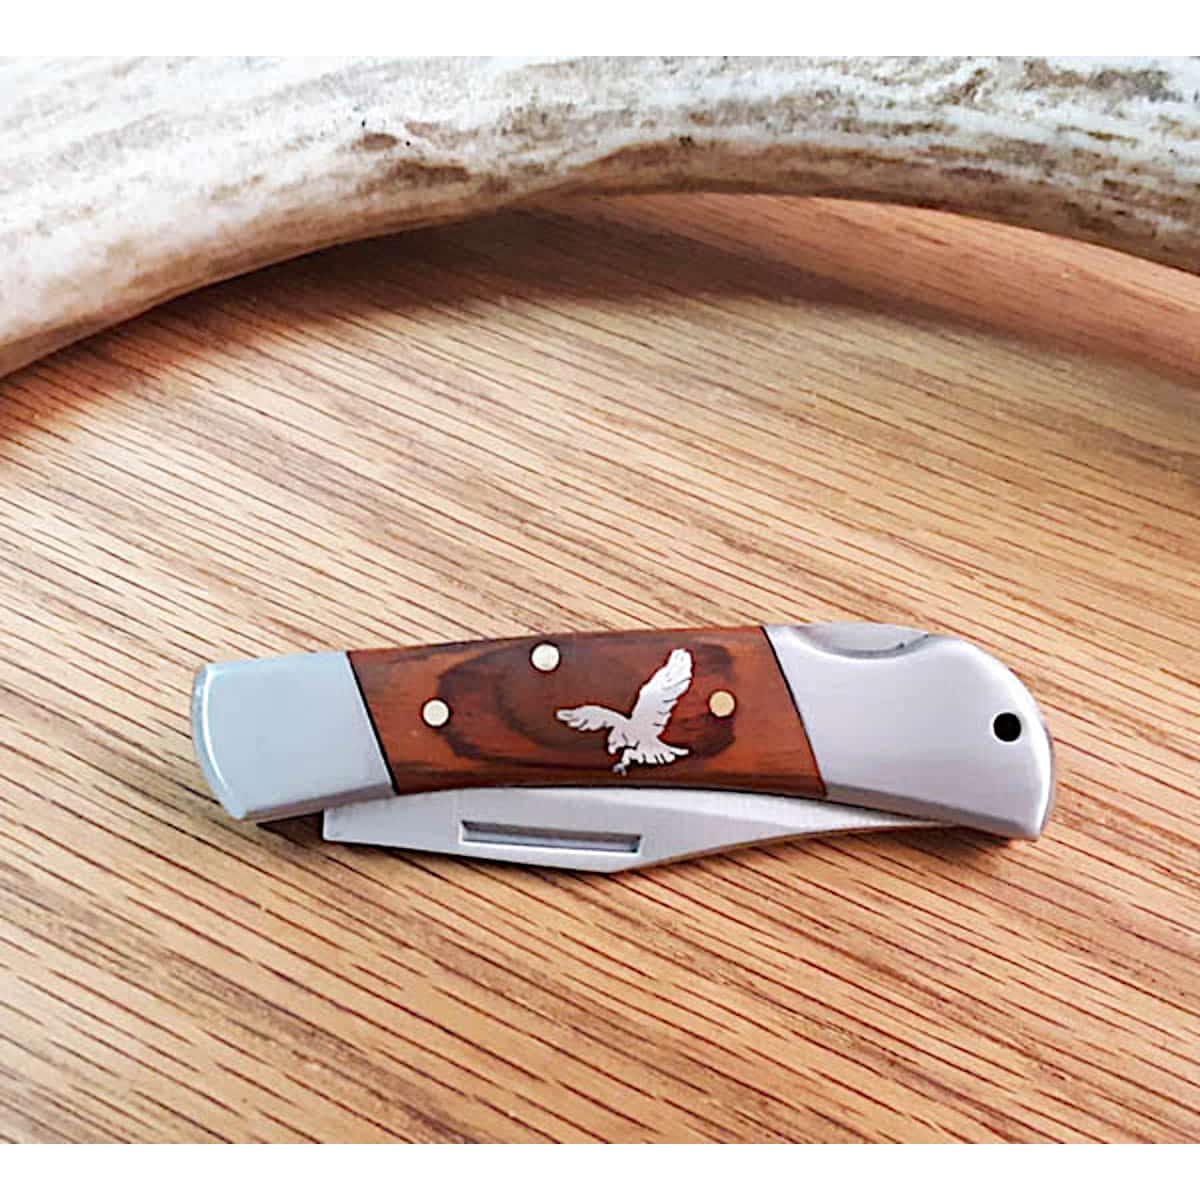 https://www.joewilcoxsedona.com/wp-content/uploads/2020/06/Eagle-Inlaid-Wood-Grain-Knife-2.jpg